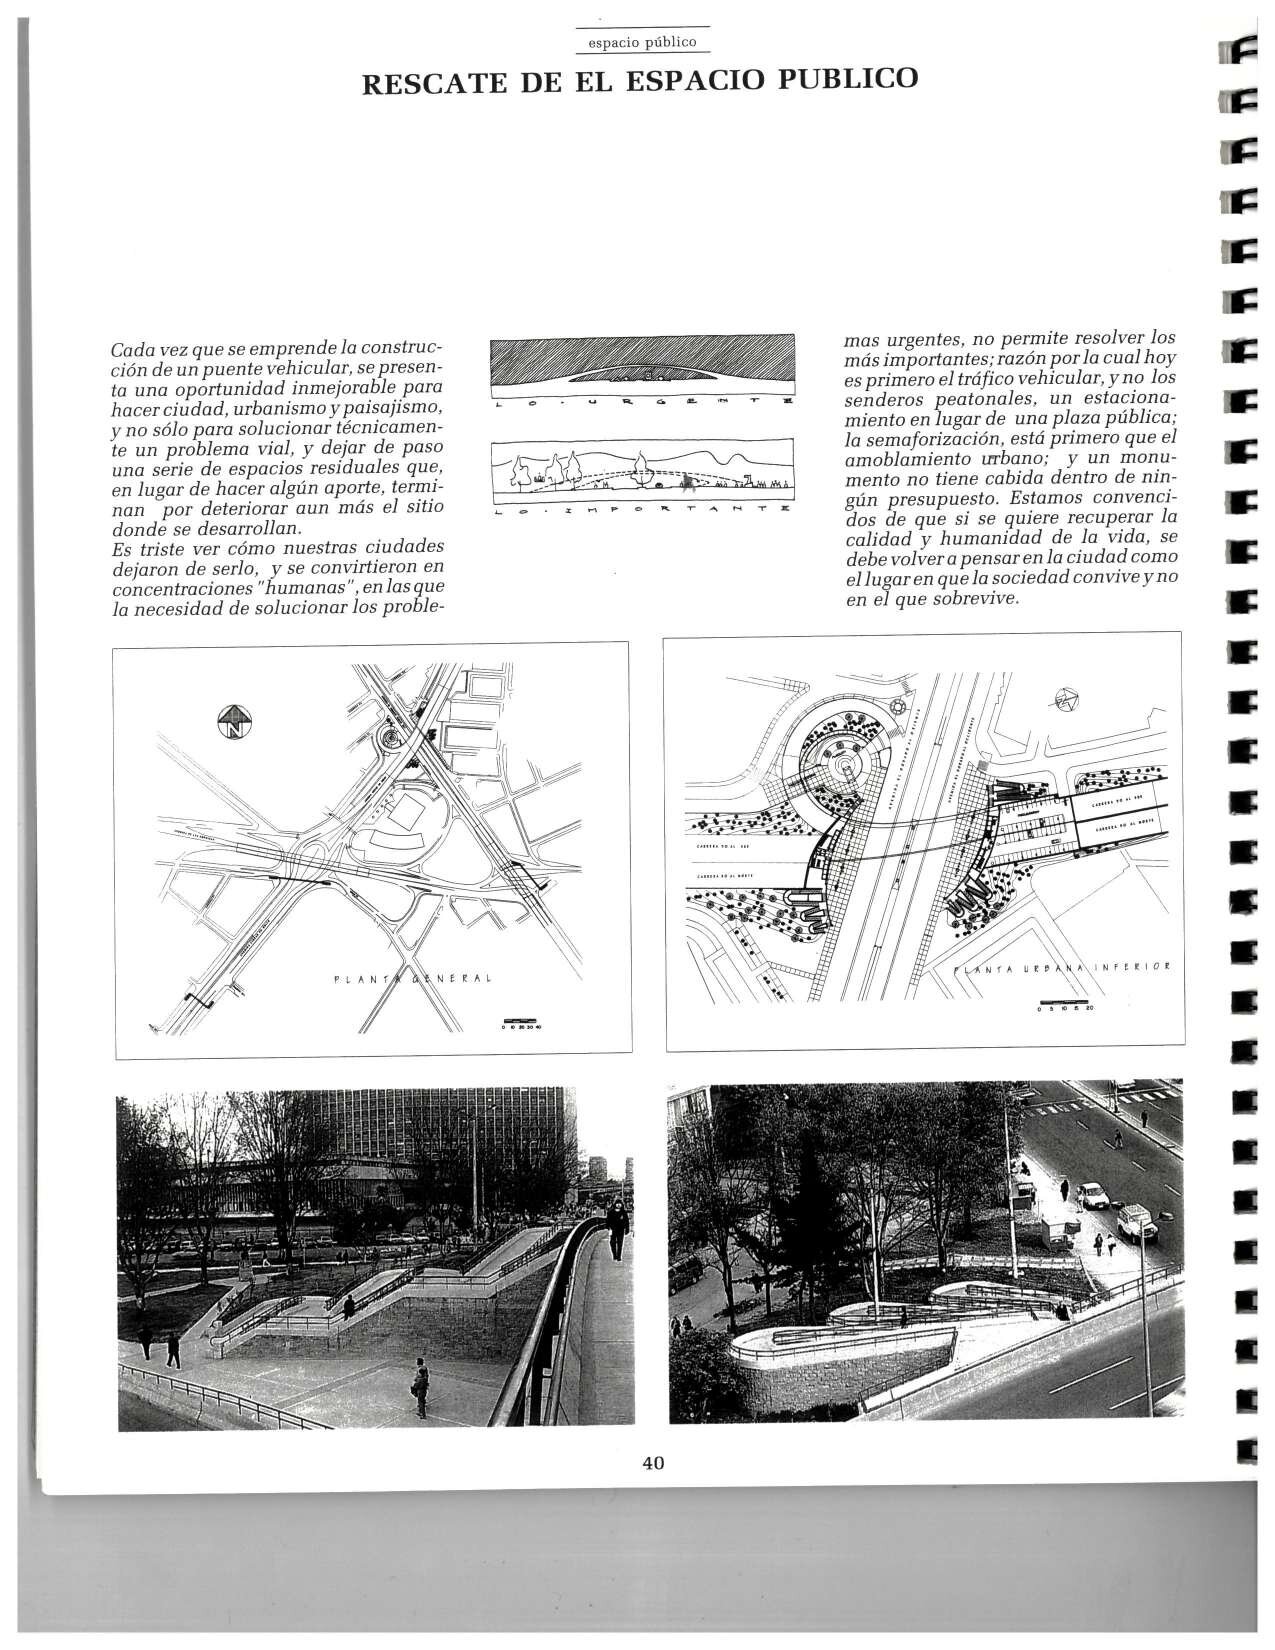 1995_Obra Contexto Urbano_Revista PROA_compressed_page-0040.jpg